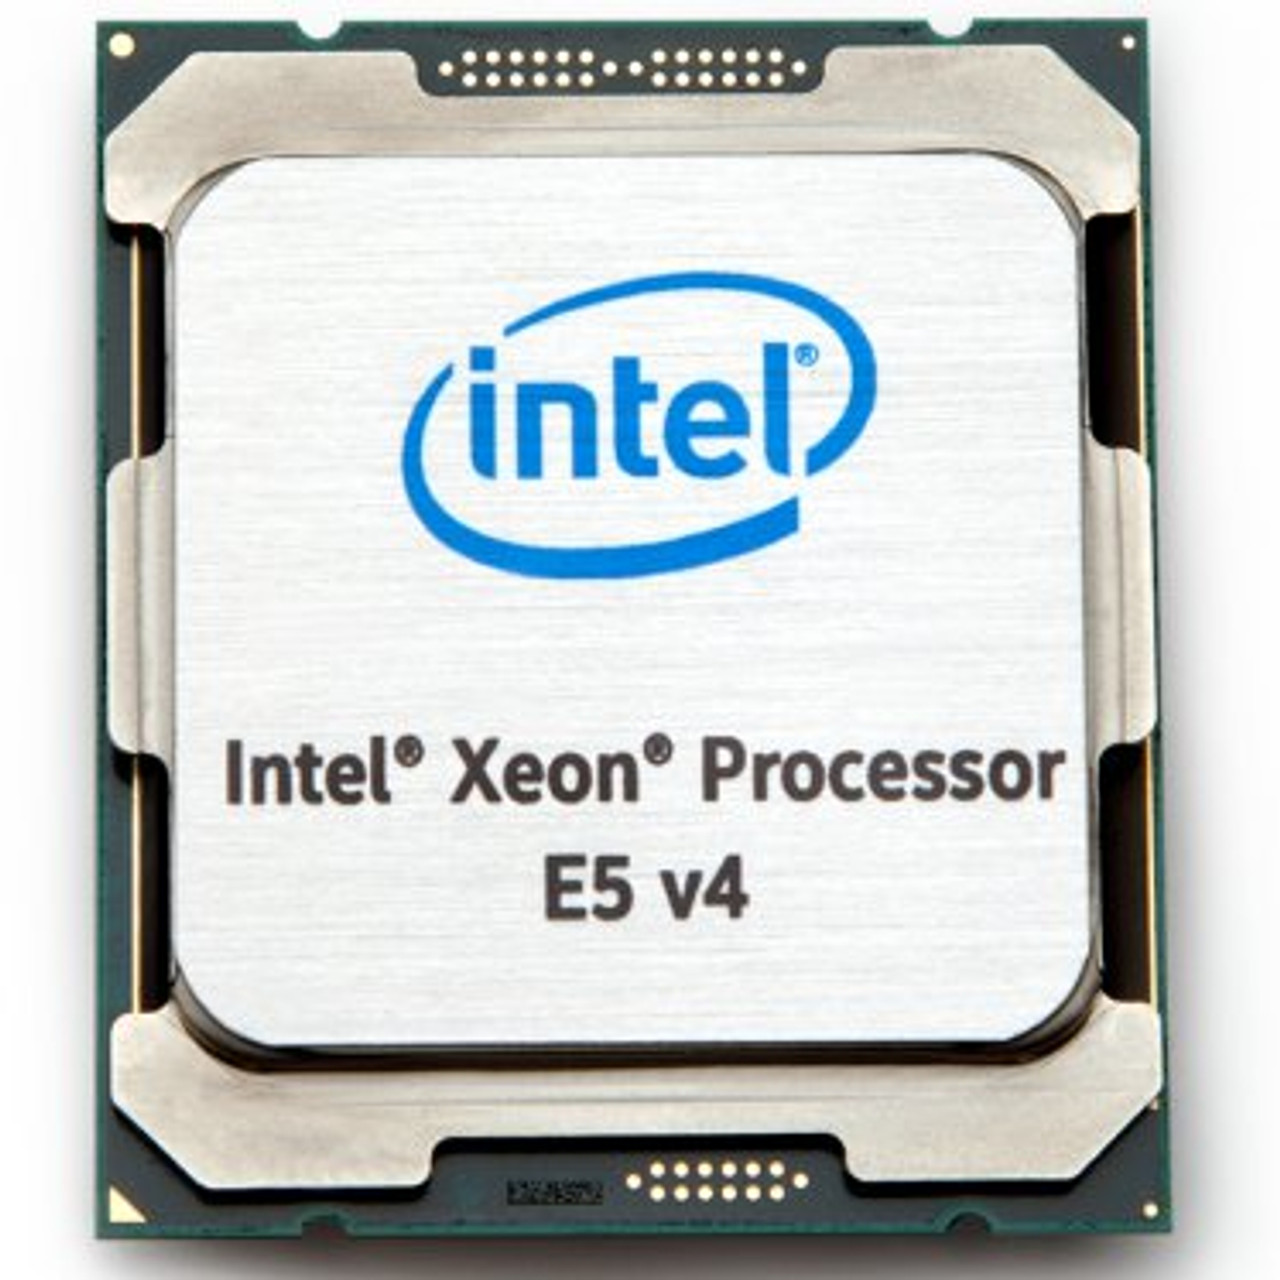 INTEL SR2NC Xeon E5-2628lv4 12-core 1.9ghz 30mb L3 Cache 8gt/s Qpi Speed Socket Fclga2011-3 75w 14nm Processor Only